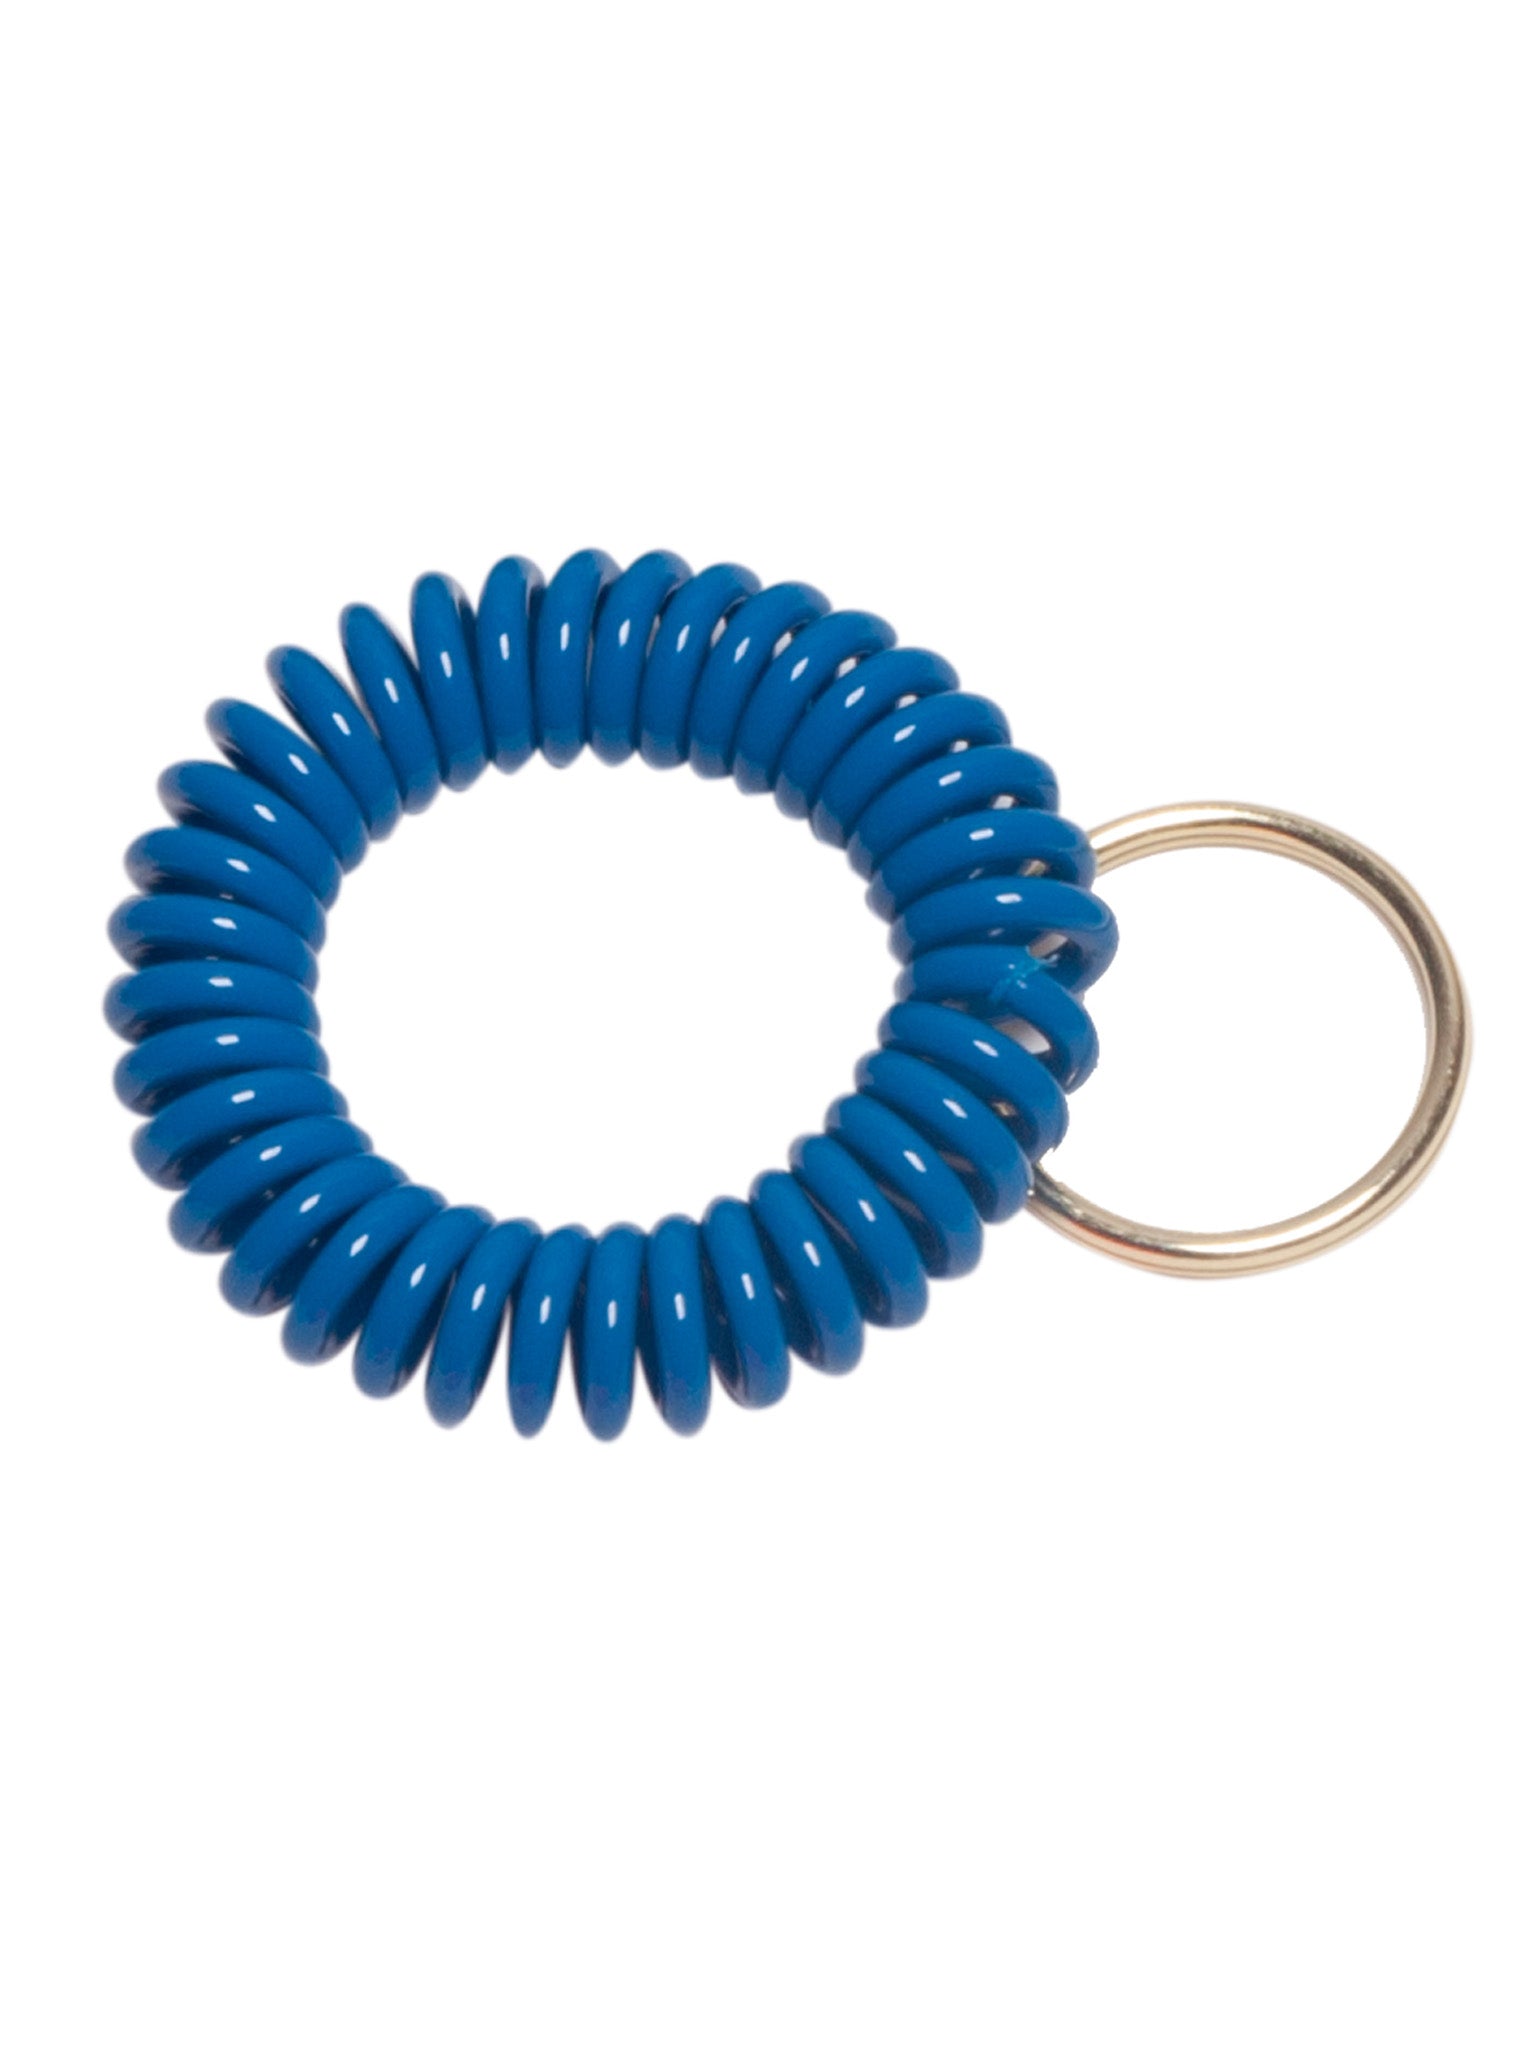 Spiral Bracelets For Whistle - Blue